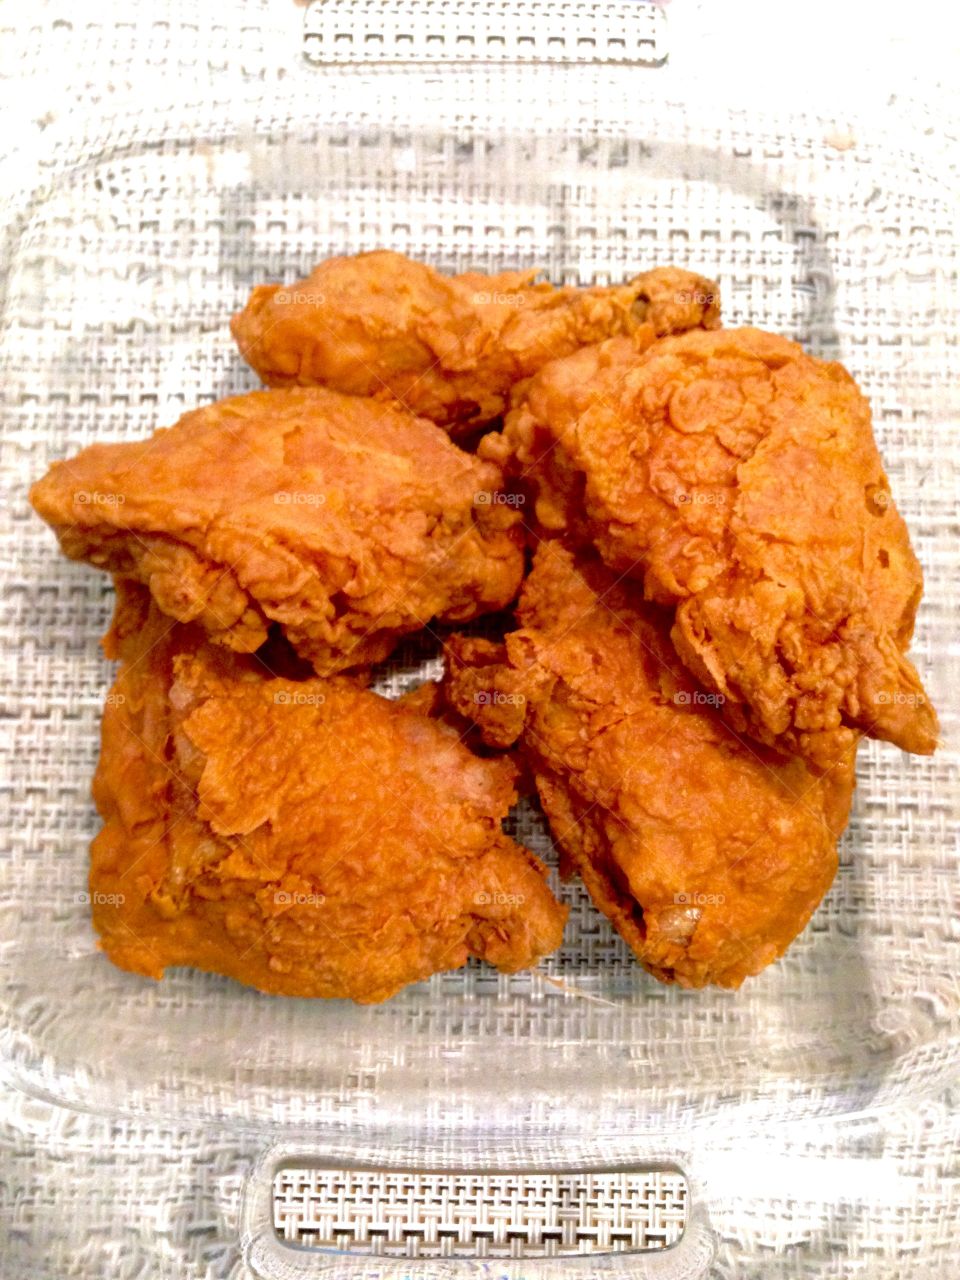 Crispy Fried Chicken

Published by:
HappyBrownMonkey 